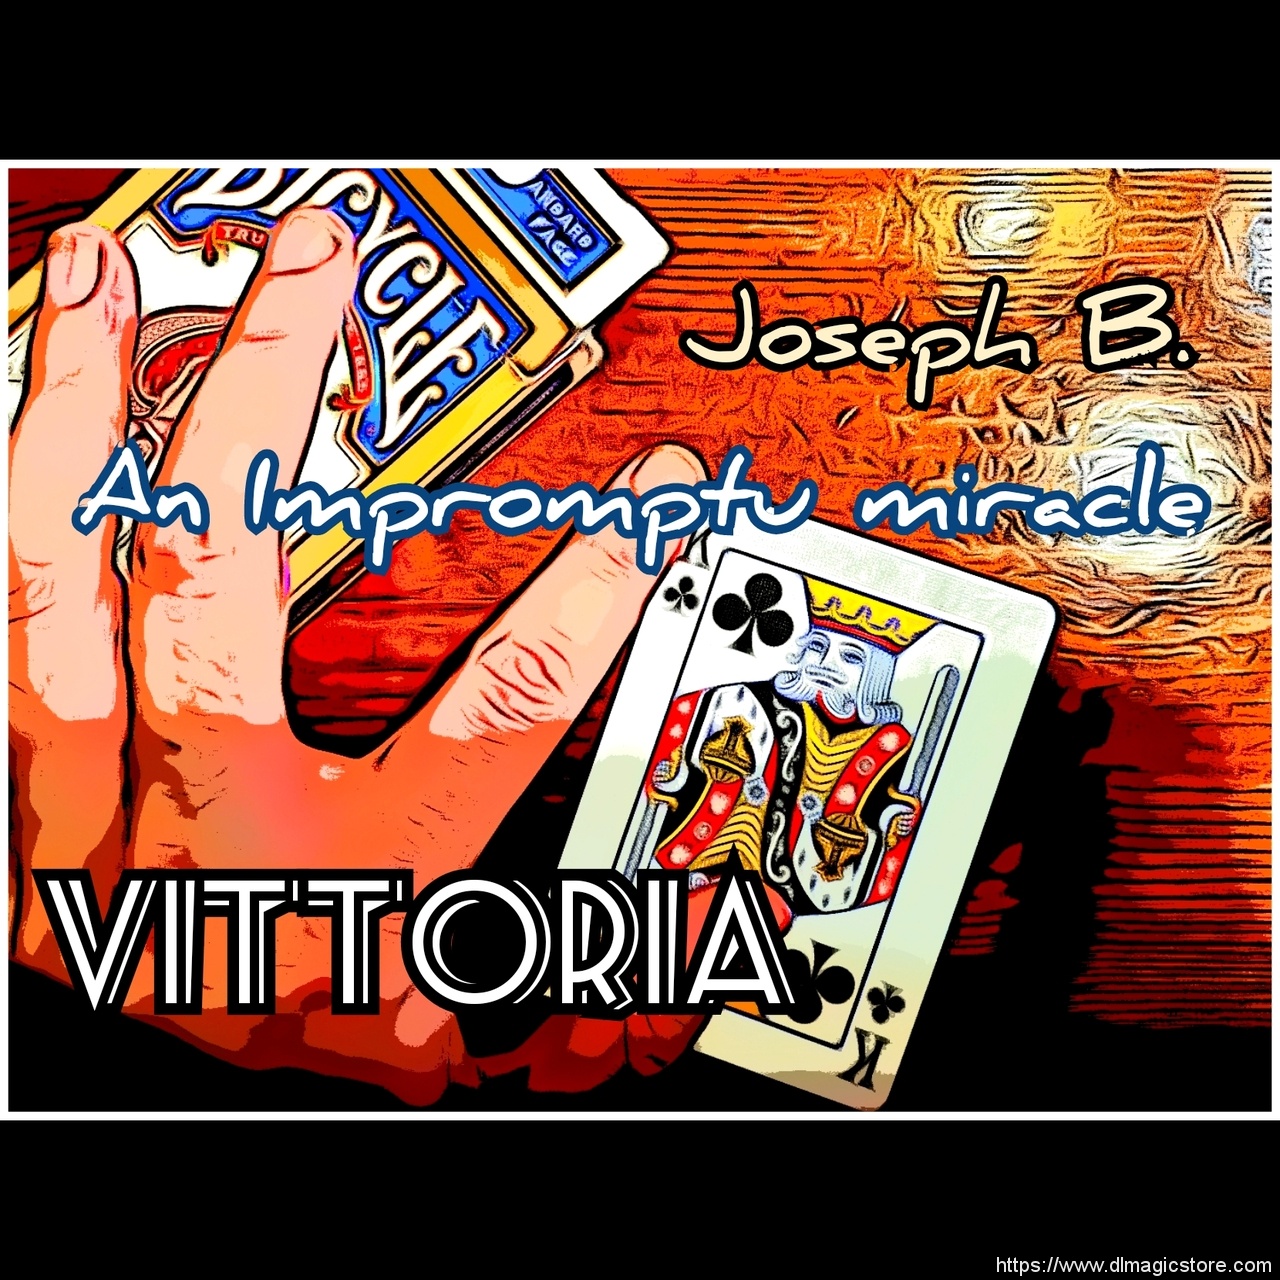 VITTORIA by Joseph B. (Instant Download)